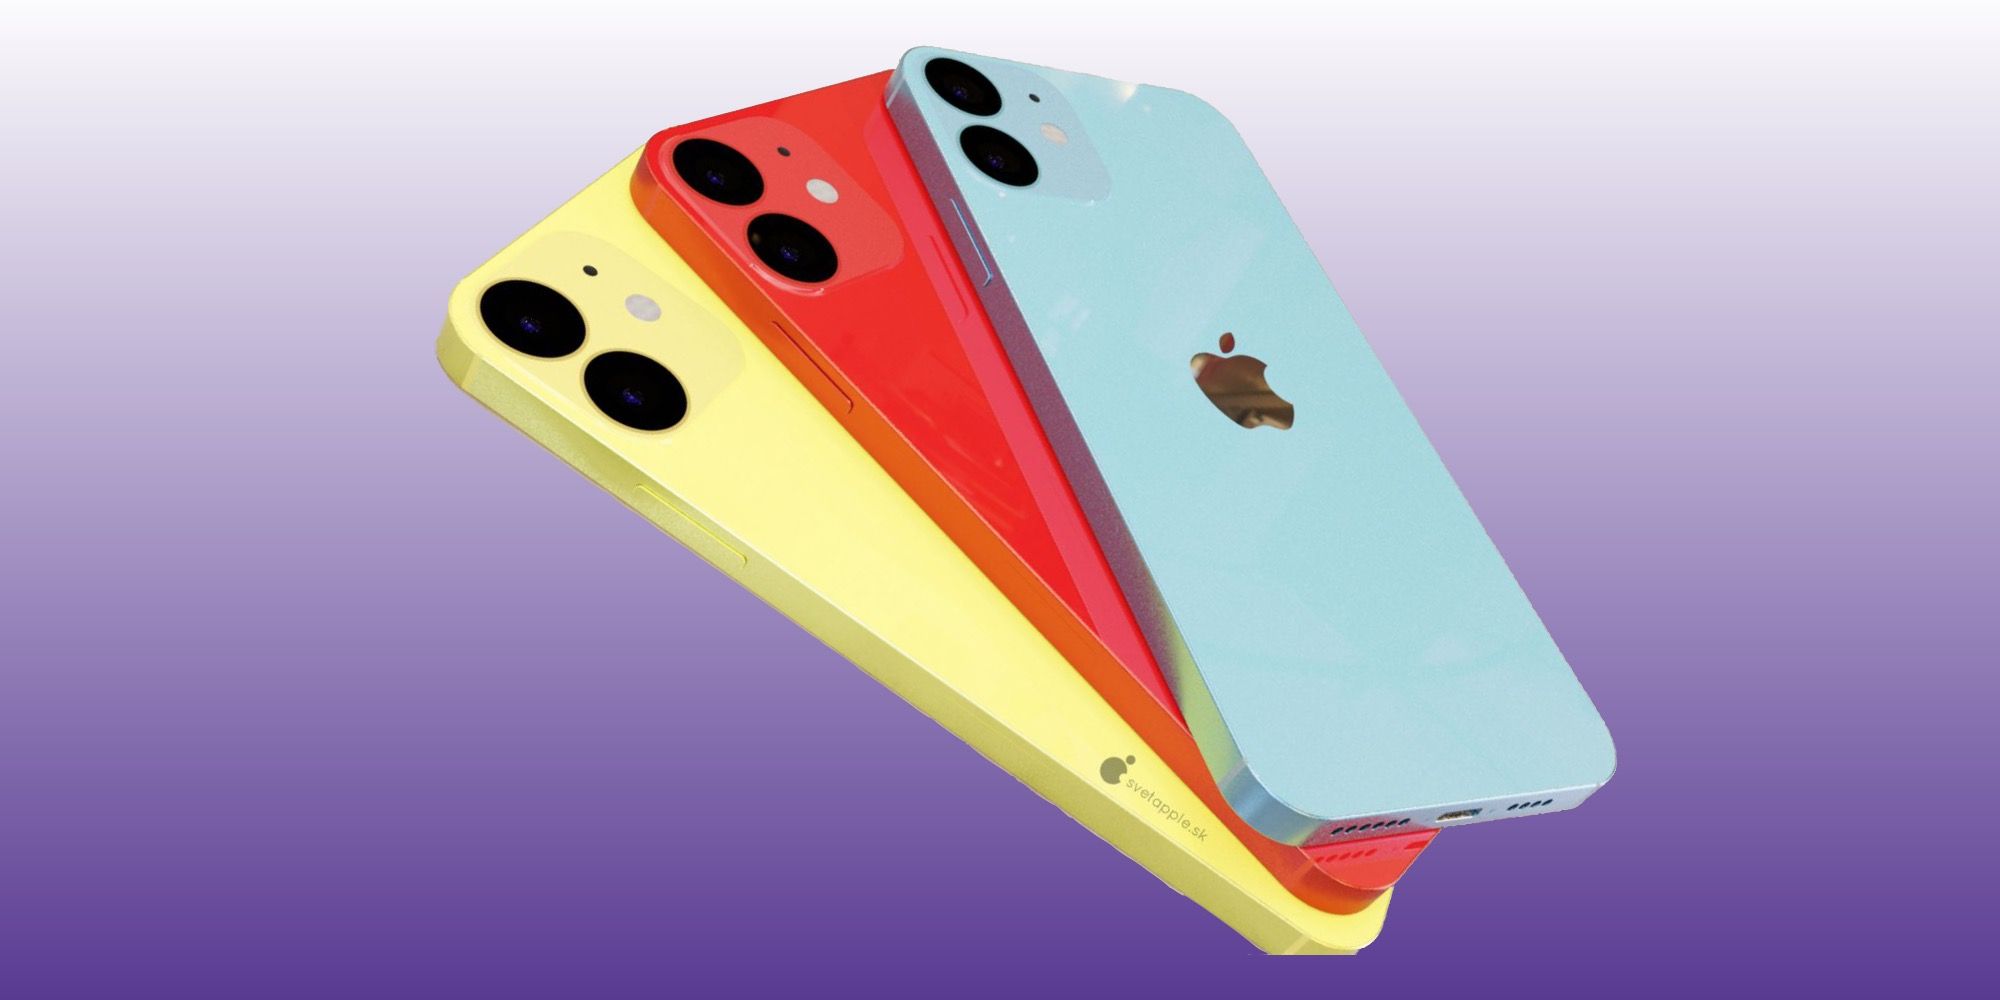 Apple iPhone 12 render